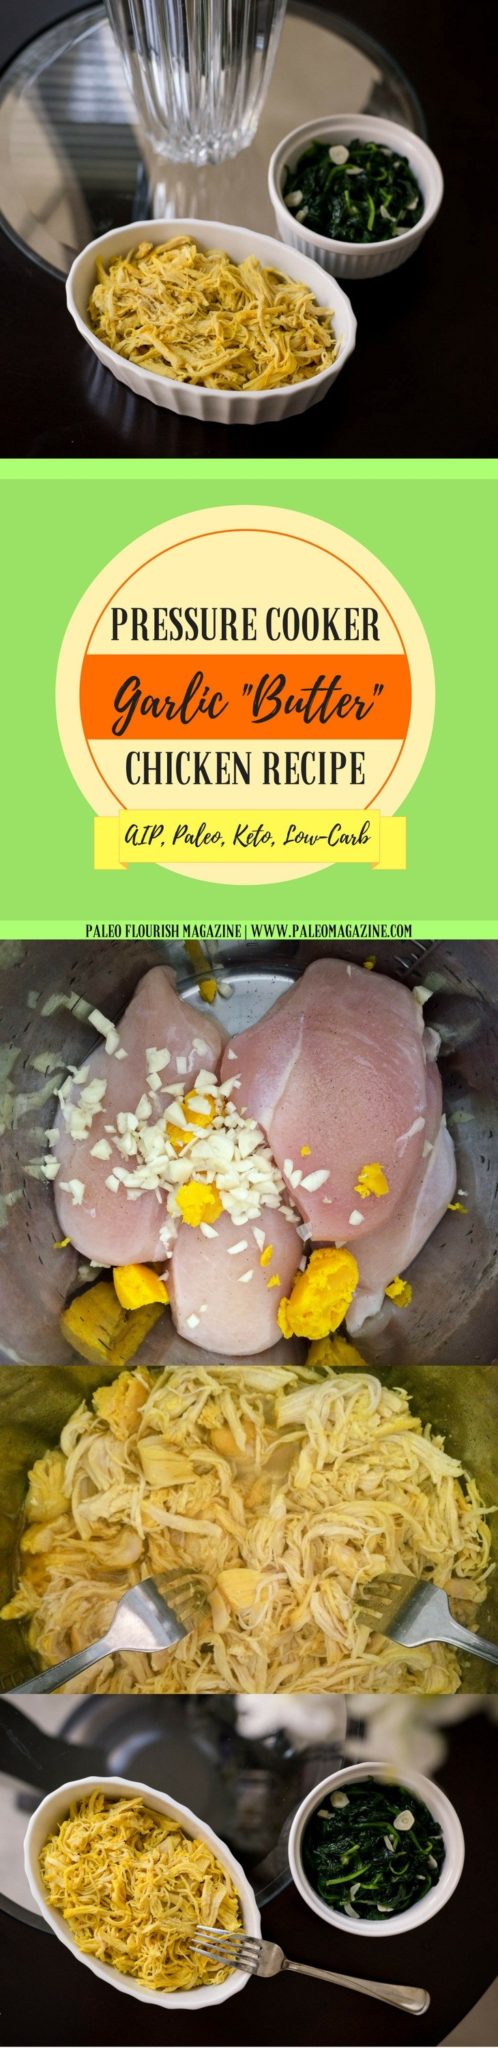 Pinterest Image for Pressure Cooker Garlic “Butter” Chicken Recipe [AIP, Paleo, Keto, Low-Carb] #paleo #recipes #glutenfree https://ketosummit.com/keto-pressure-cooker-garlic-butter-chicken-recipe